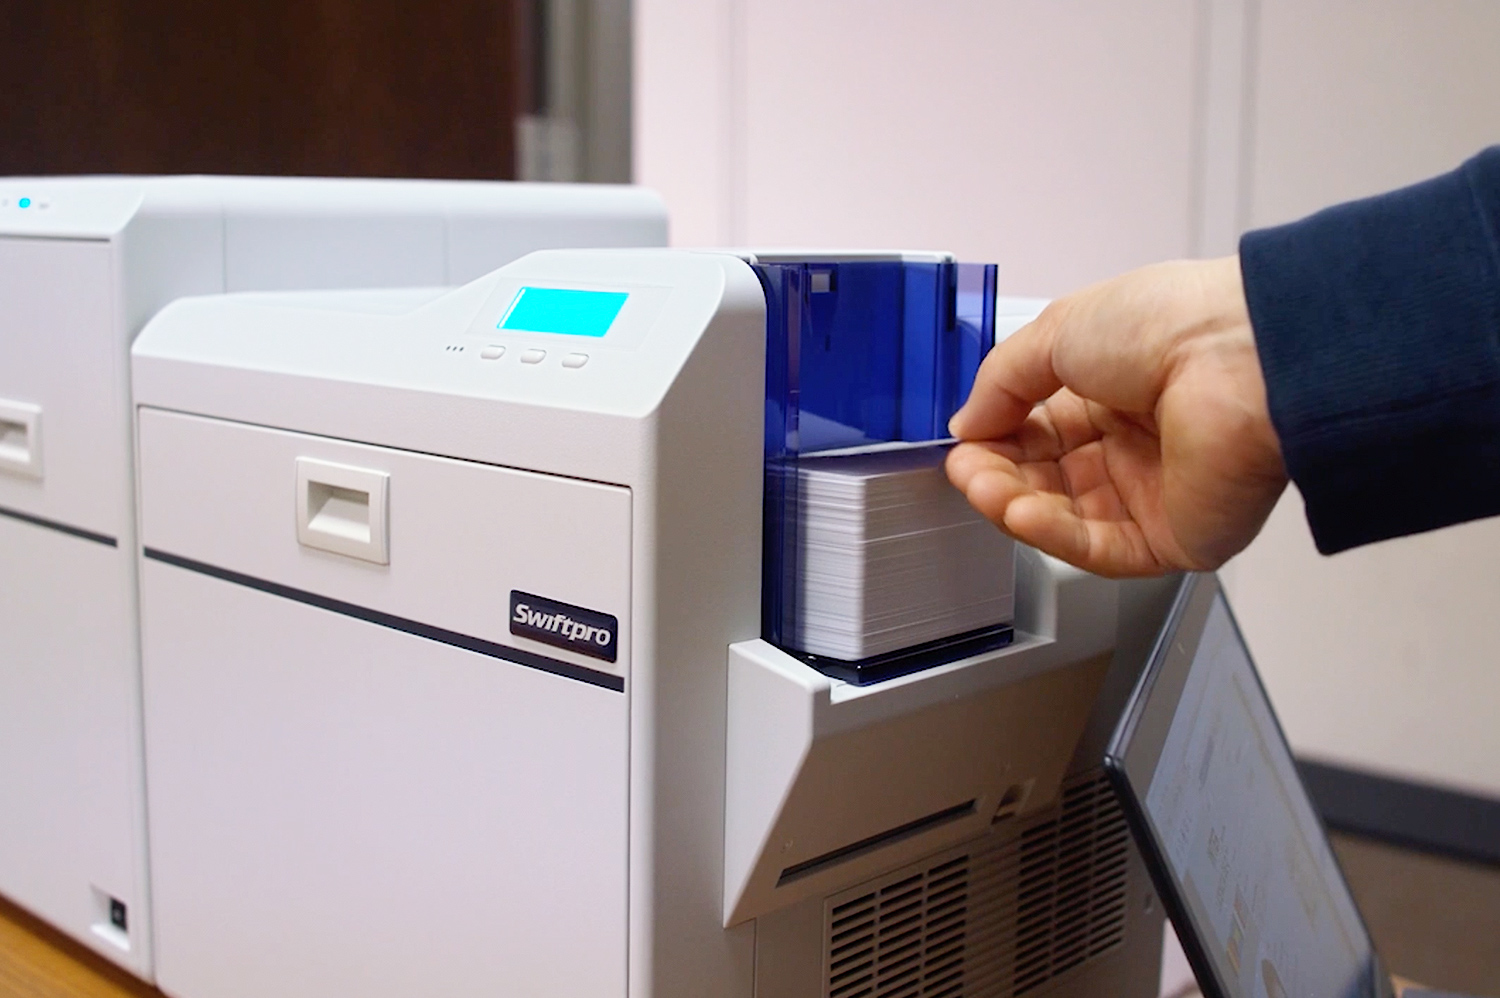 Explore K60 ID card printer encoding capabilities